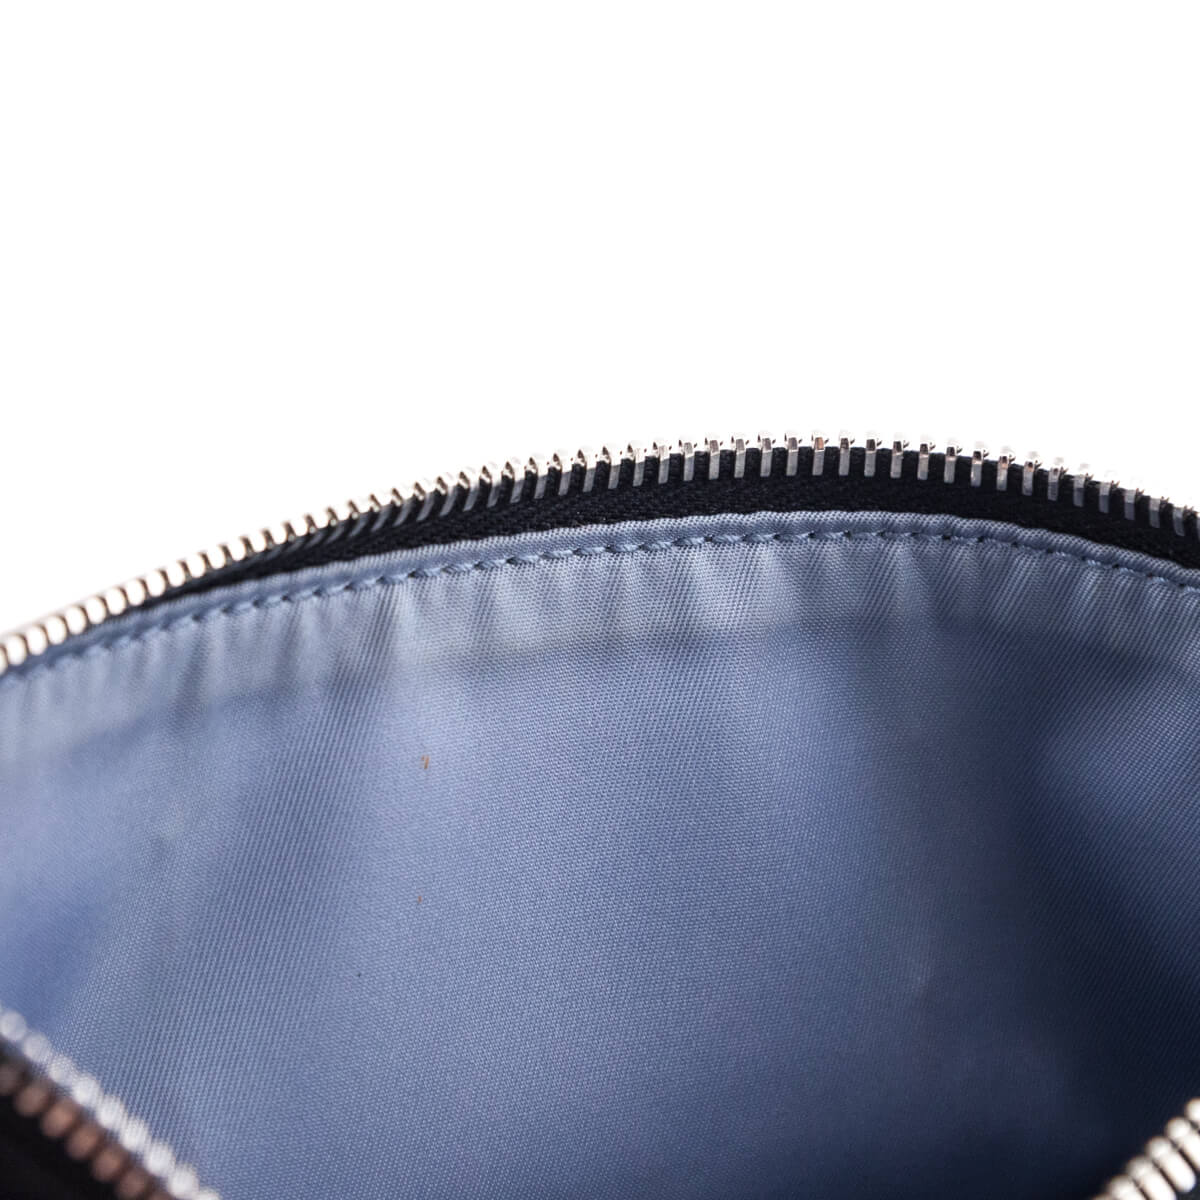 Prada Black Nylon Studded Etiquette Zip Shoulder Bag - Love that Bag etc - Preowned Authentic Designer Handbags & Preloved Fashions